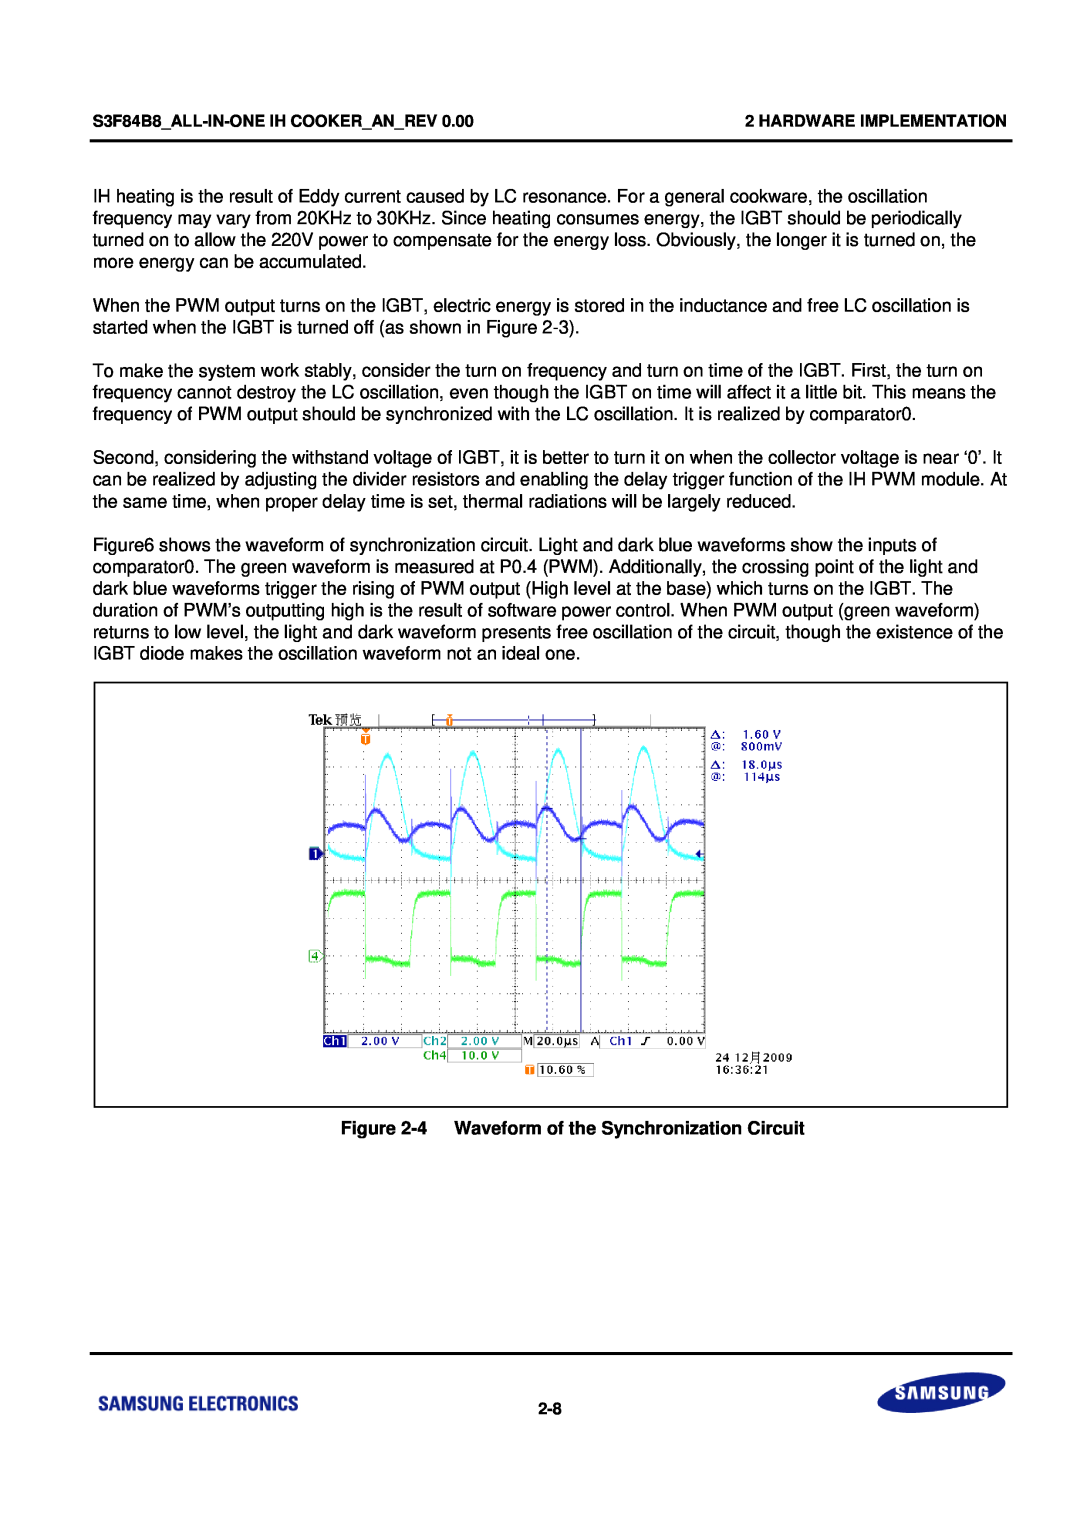 Samsung S3F84B8 manual 4 Waveform of the Synchronization Circuit 